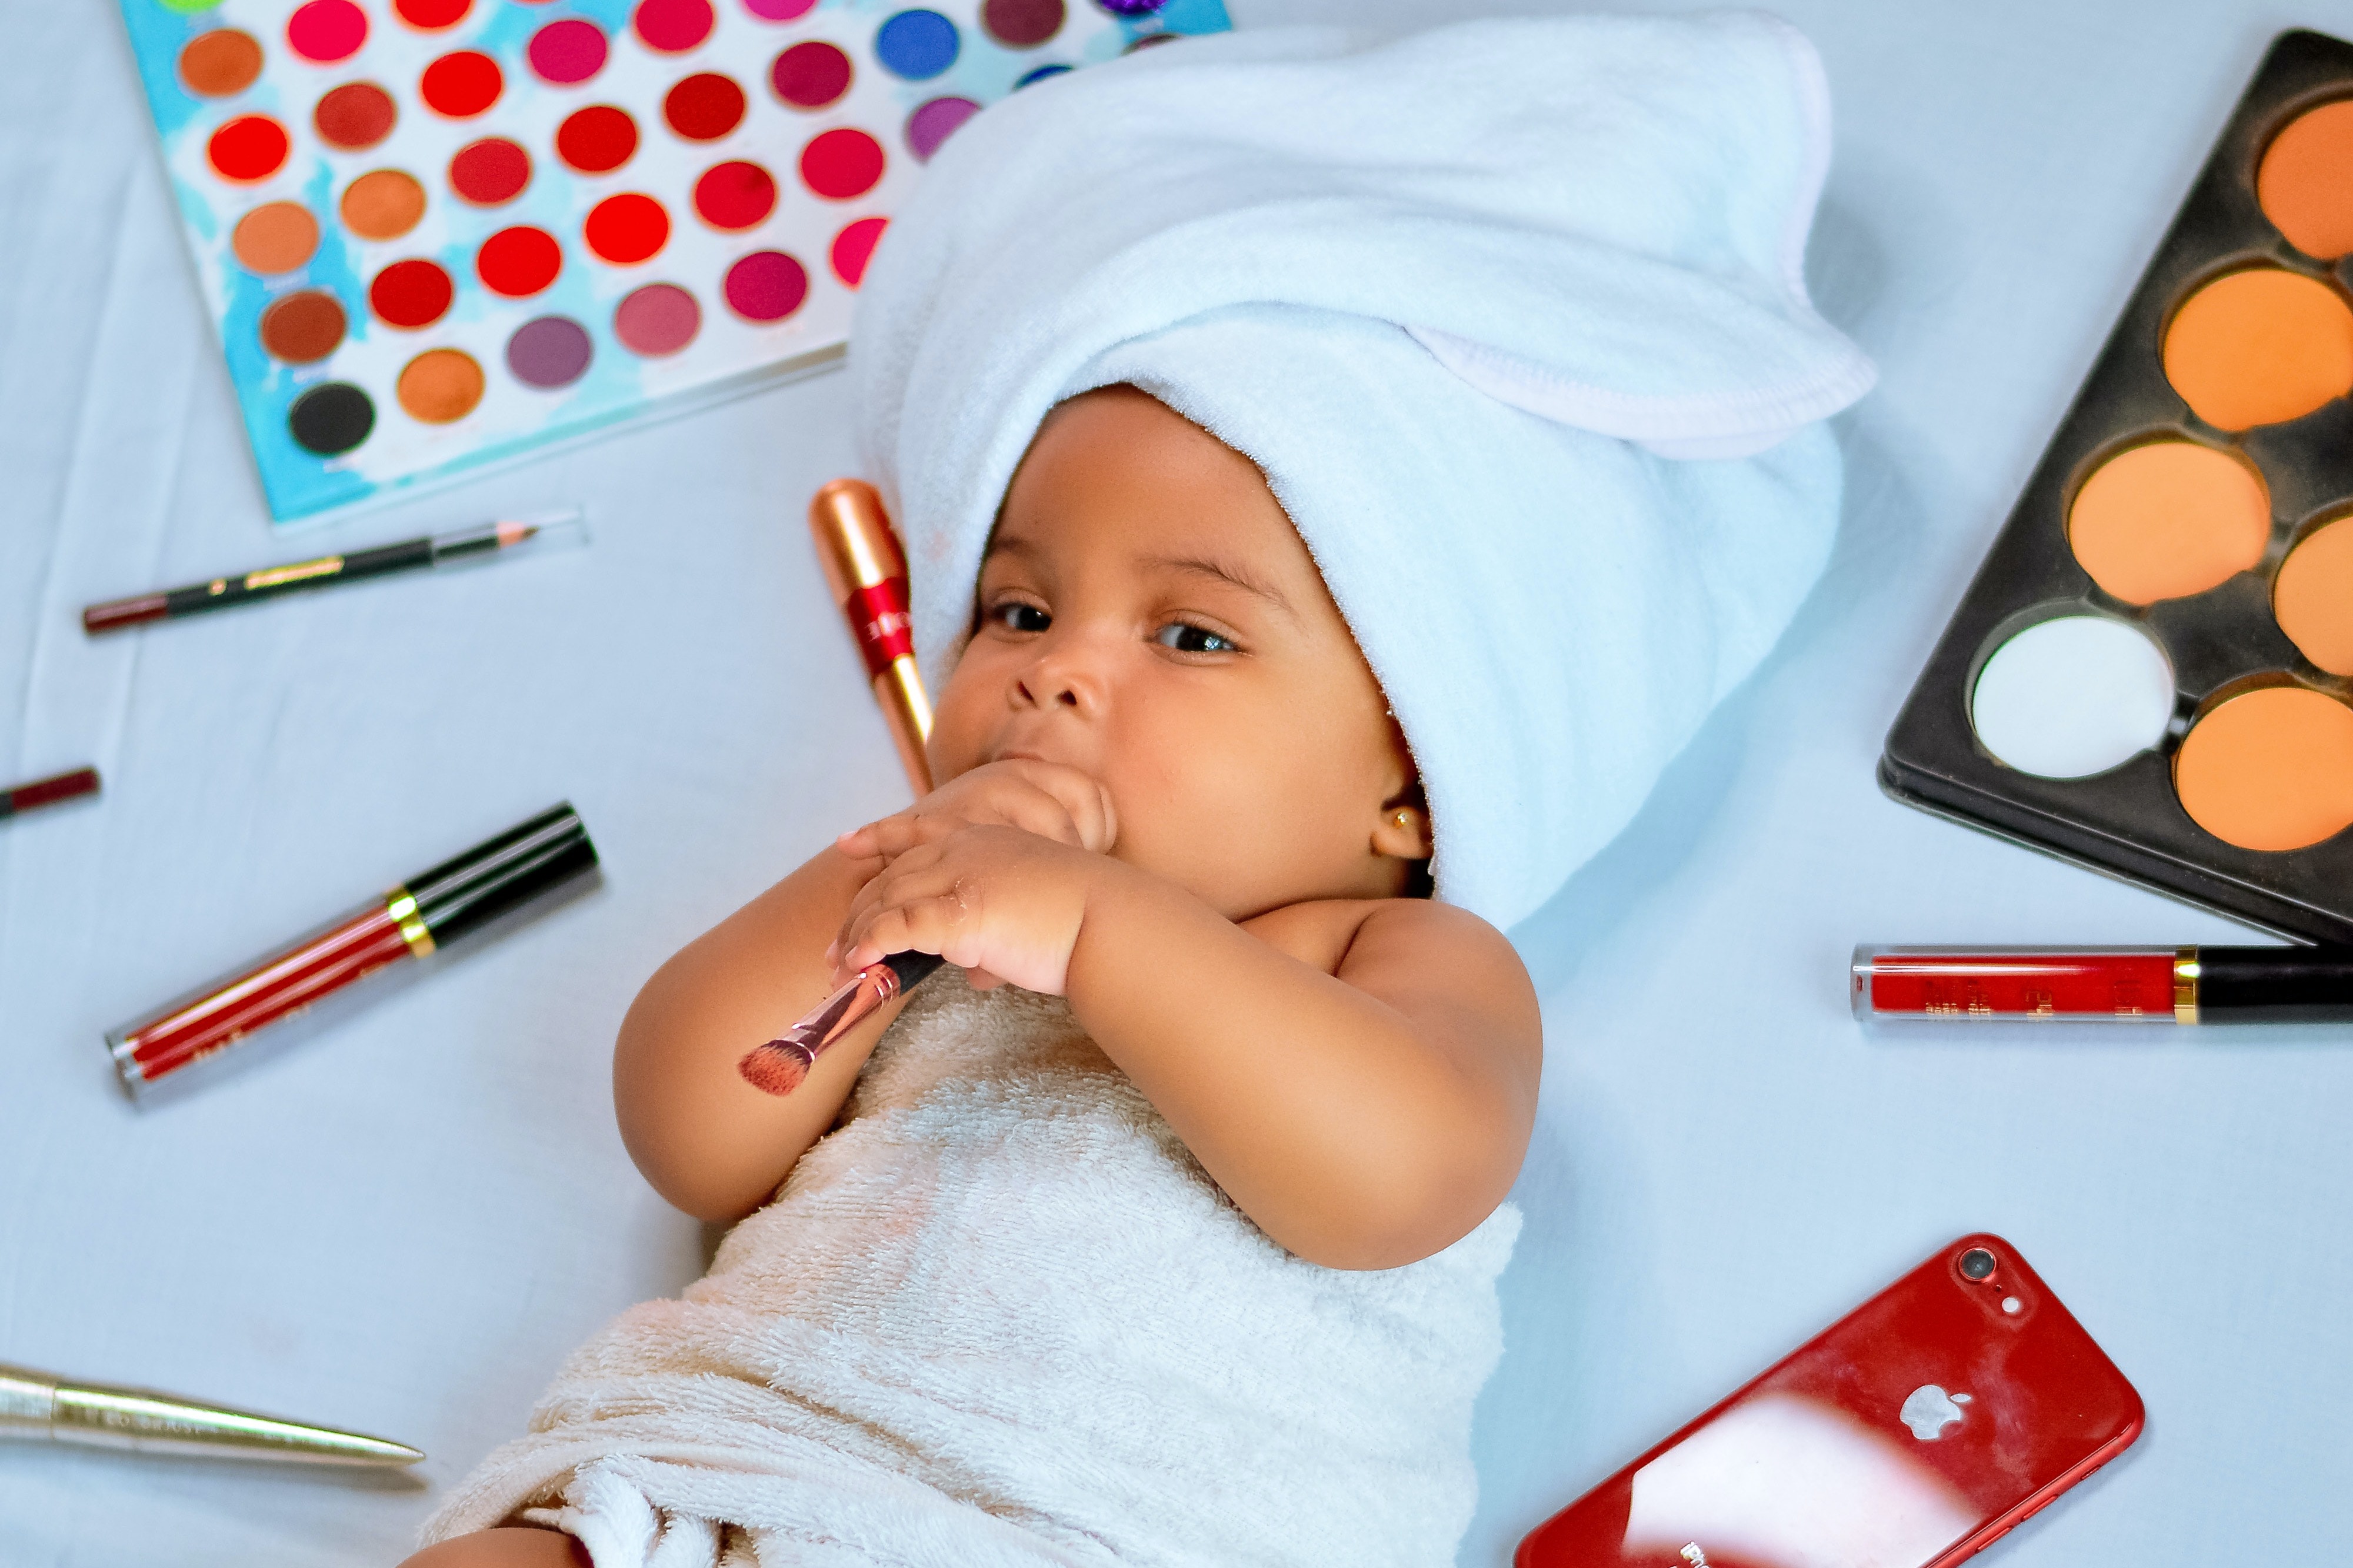 Lipjes getuit, baby d'r uit: Birthing make-up is dé nieuwe trend op TikTok